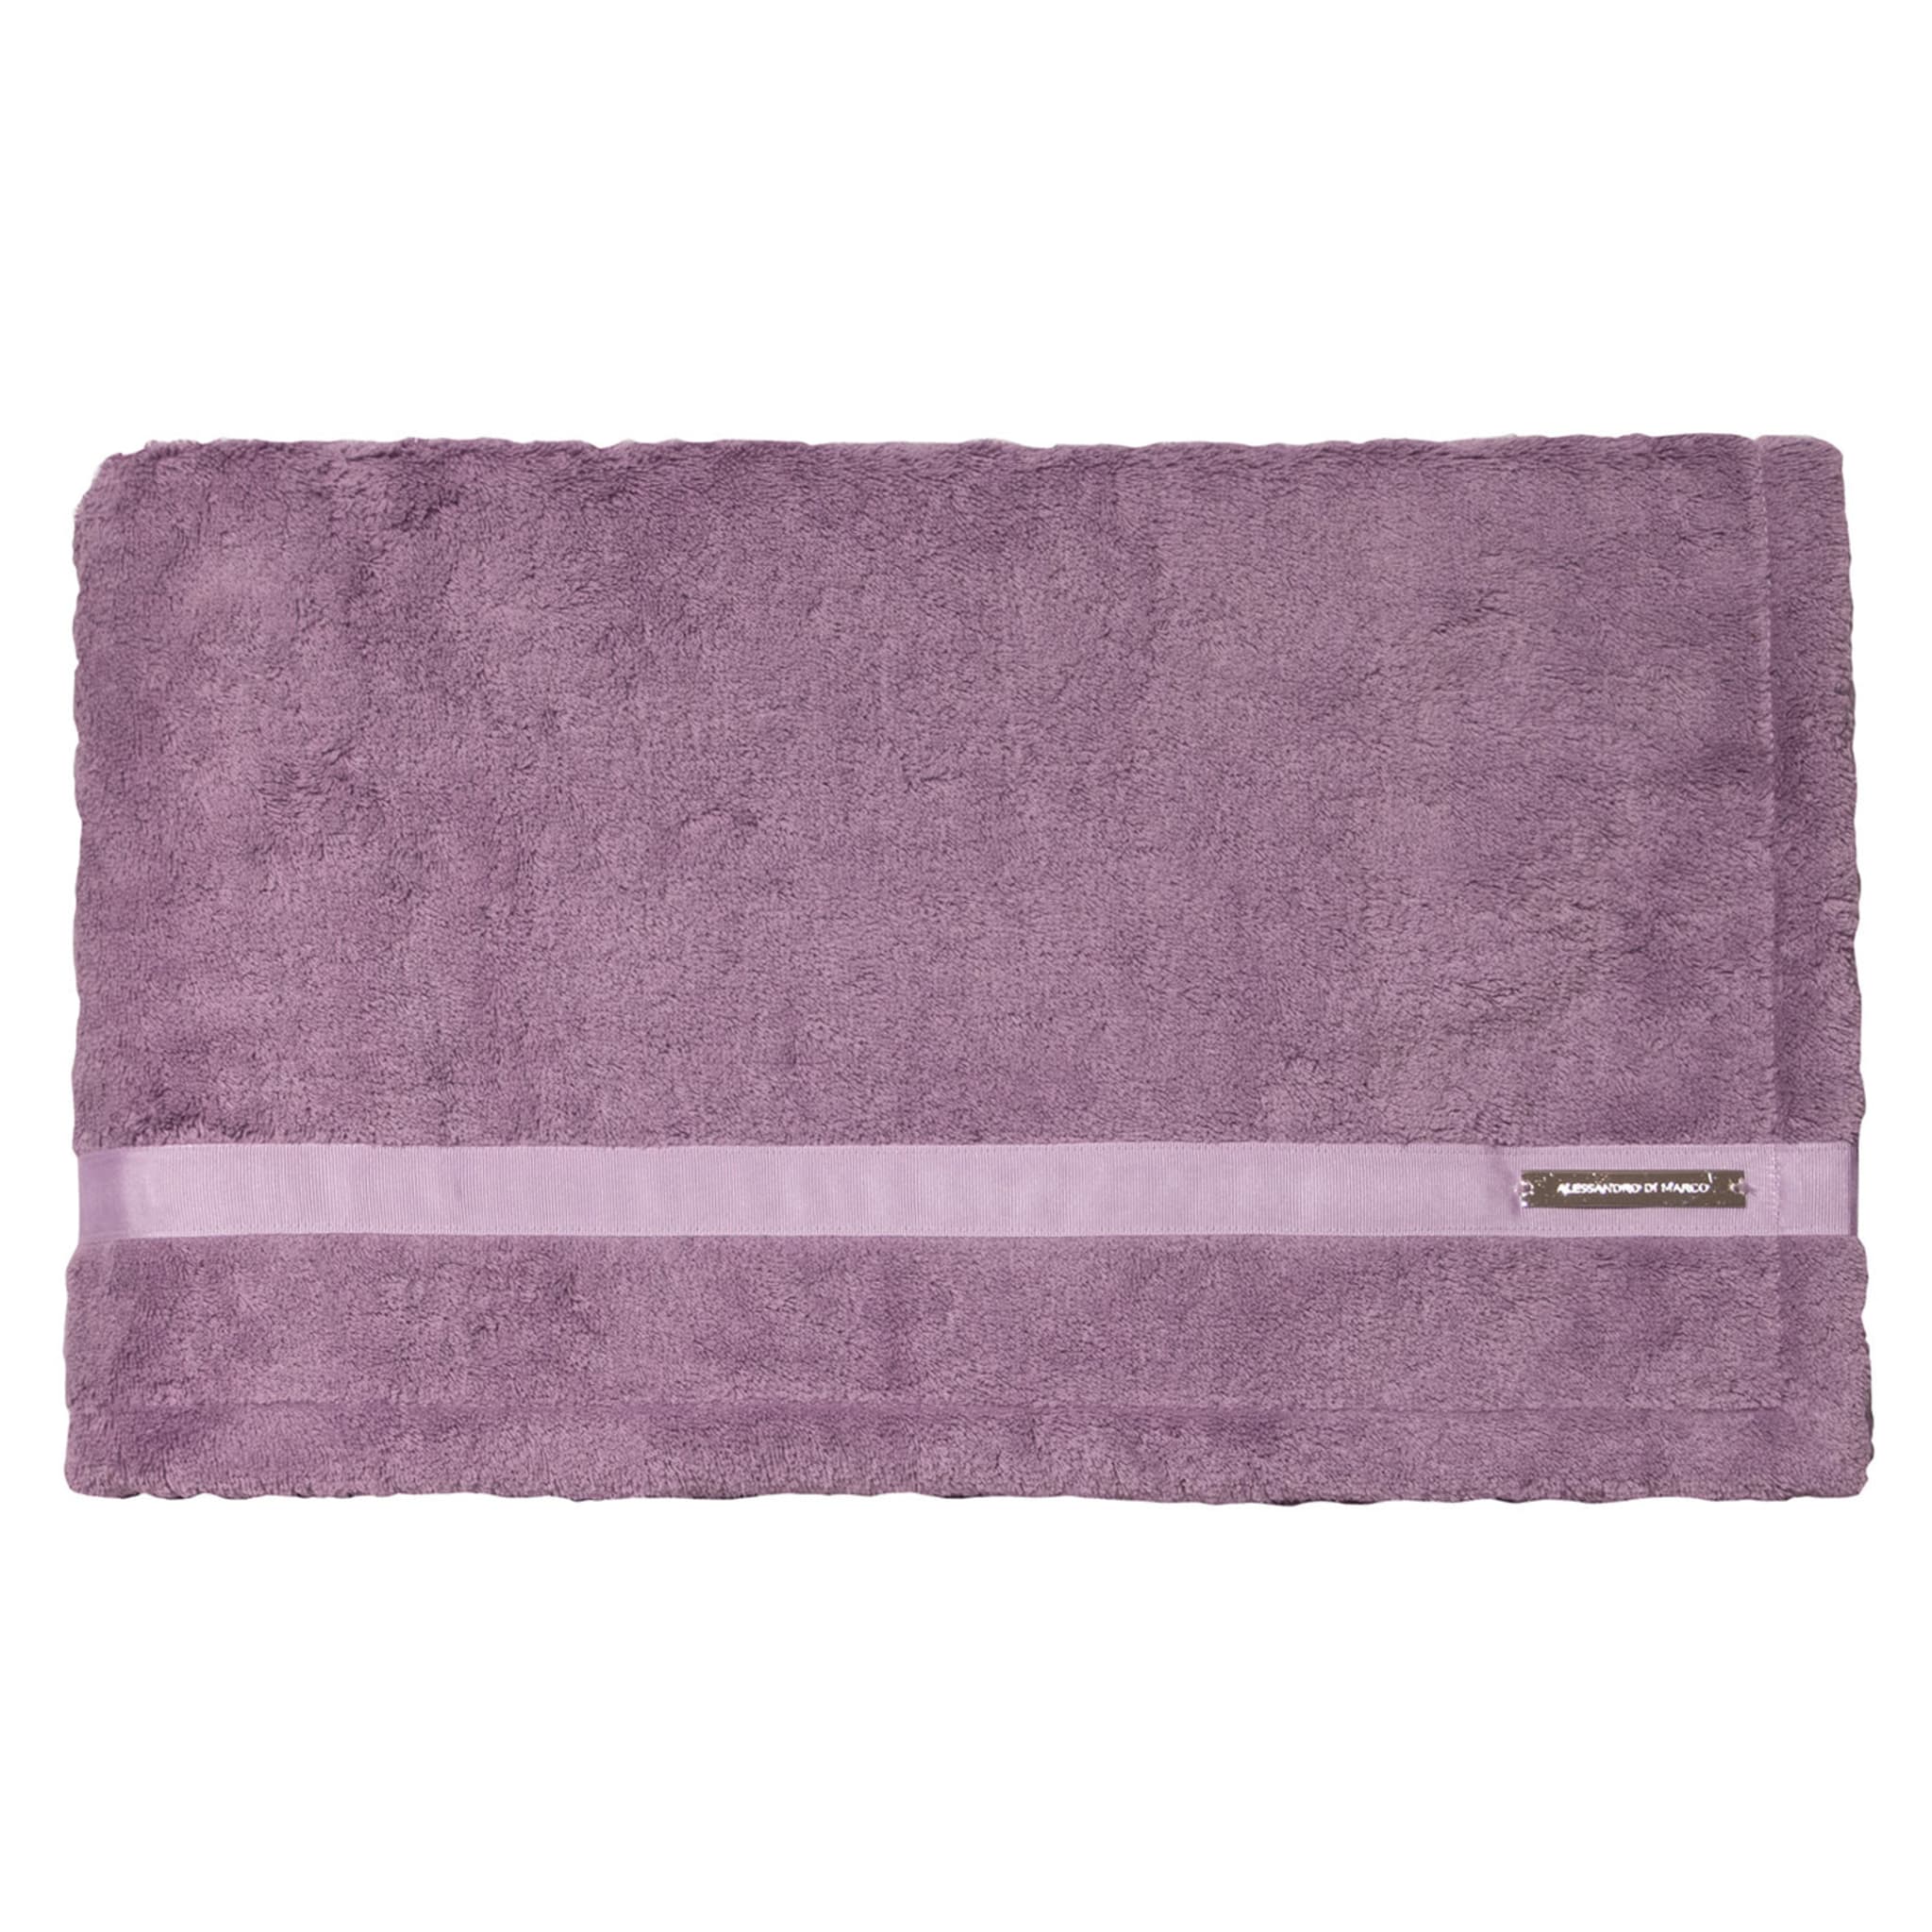 Large Bath Towel Set - Lilac - Alternative view 1